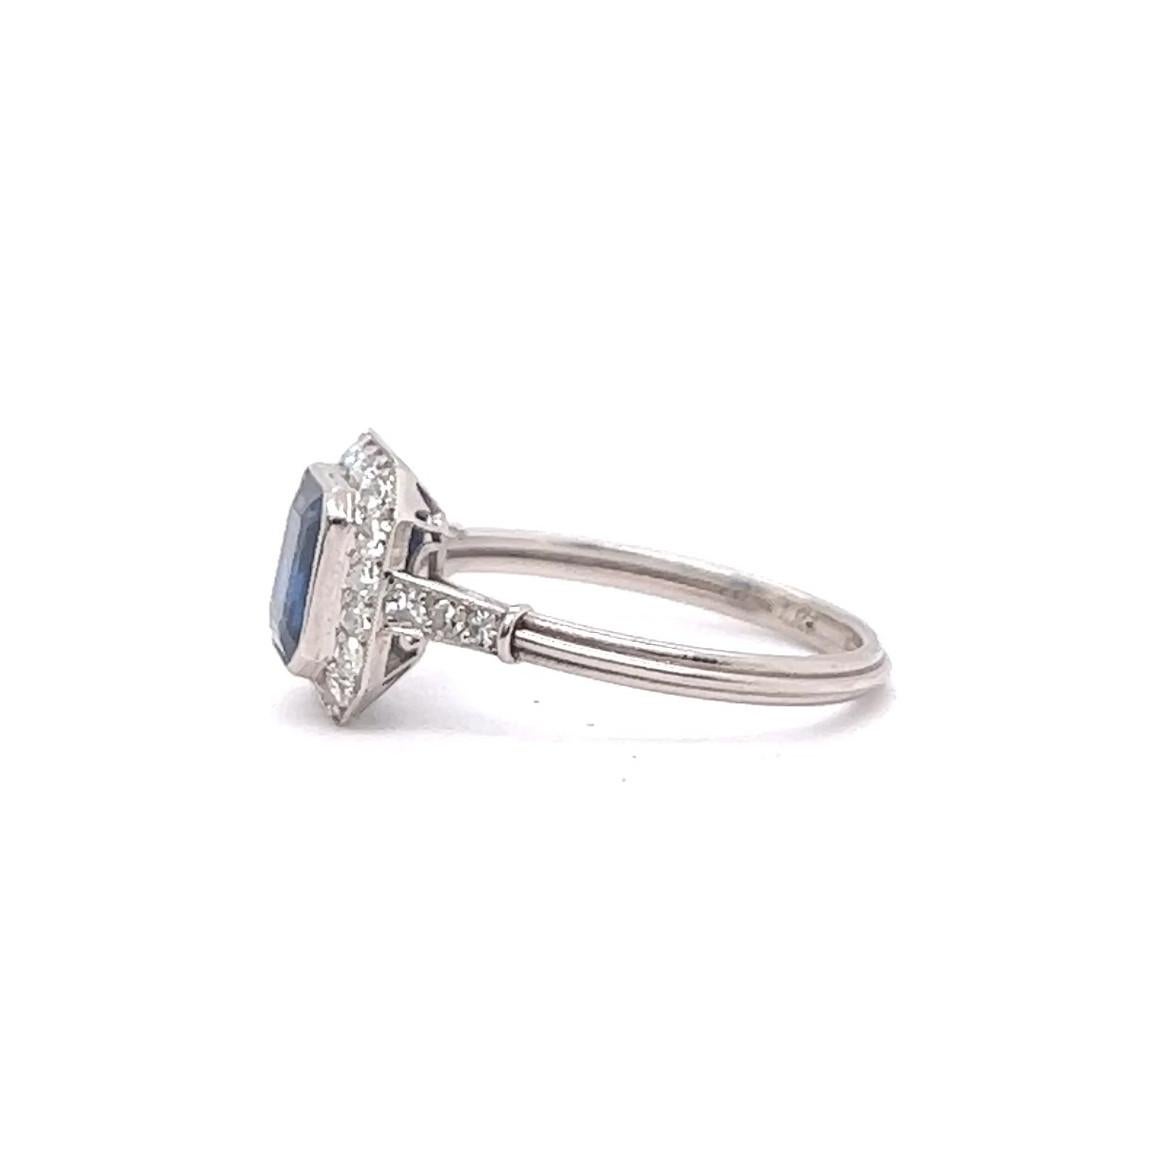 Art Deco Inspired Sapphire Diamond Platinum Ring For Sale 3